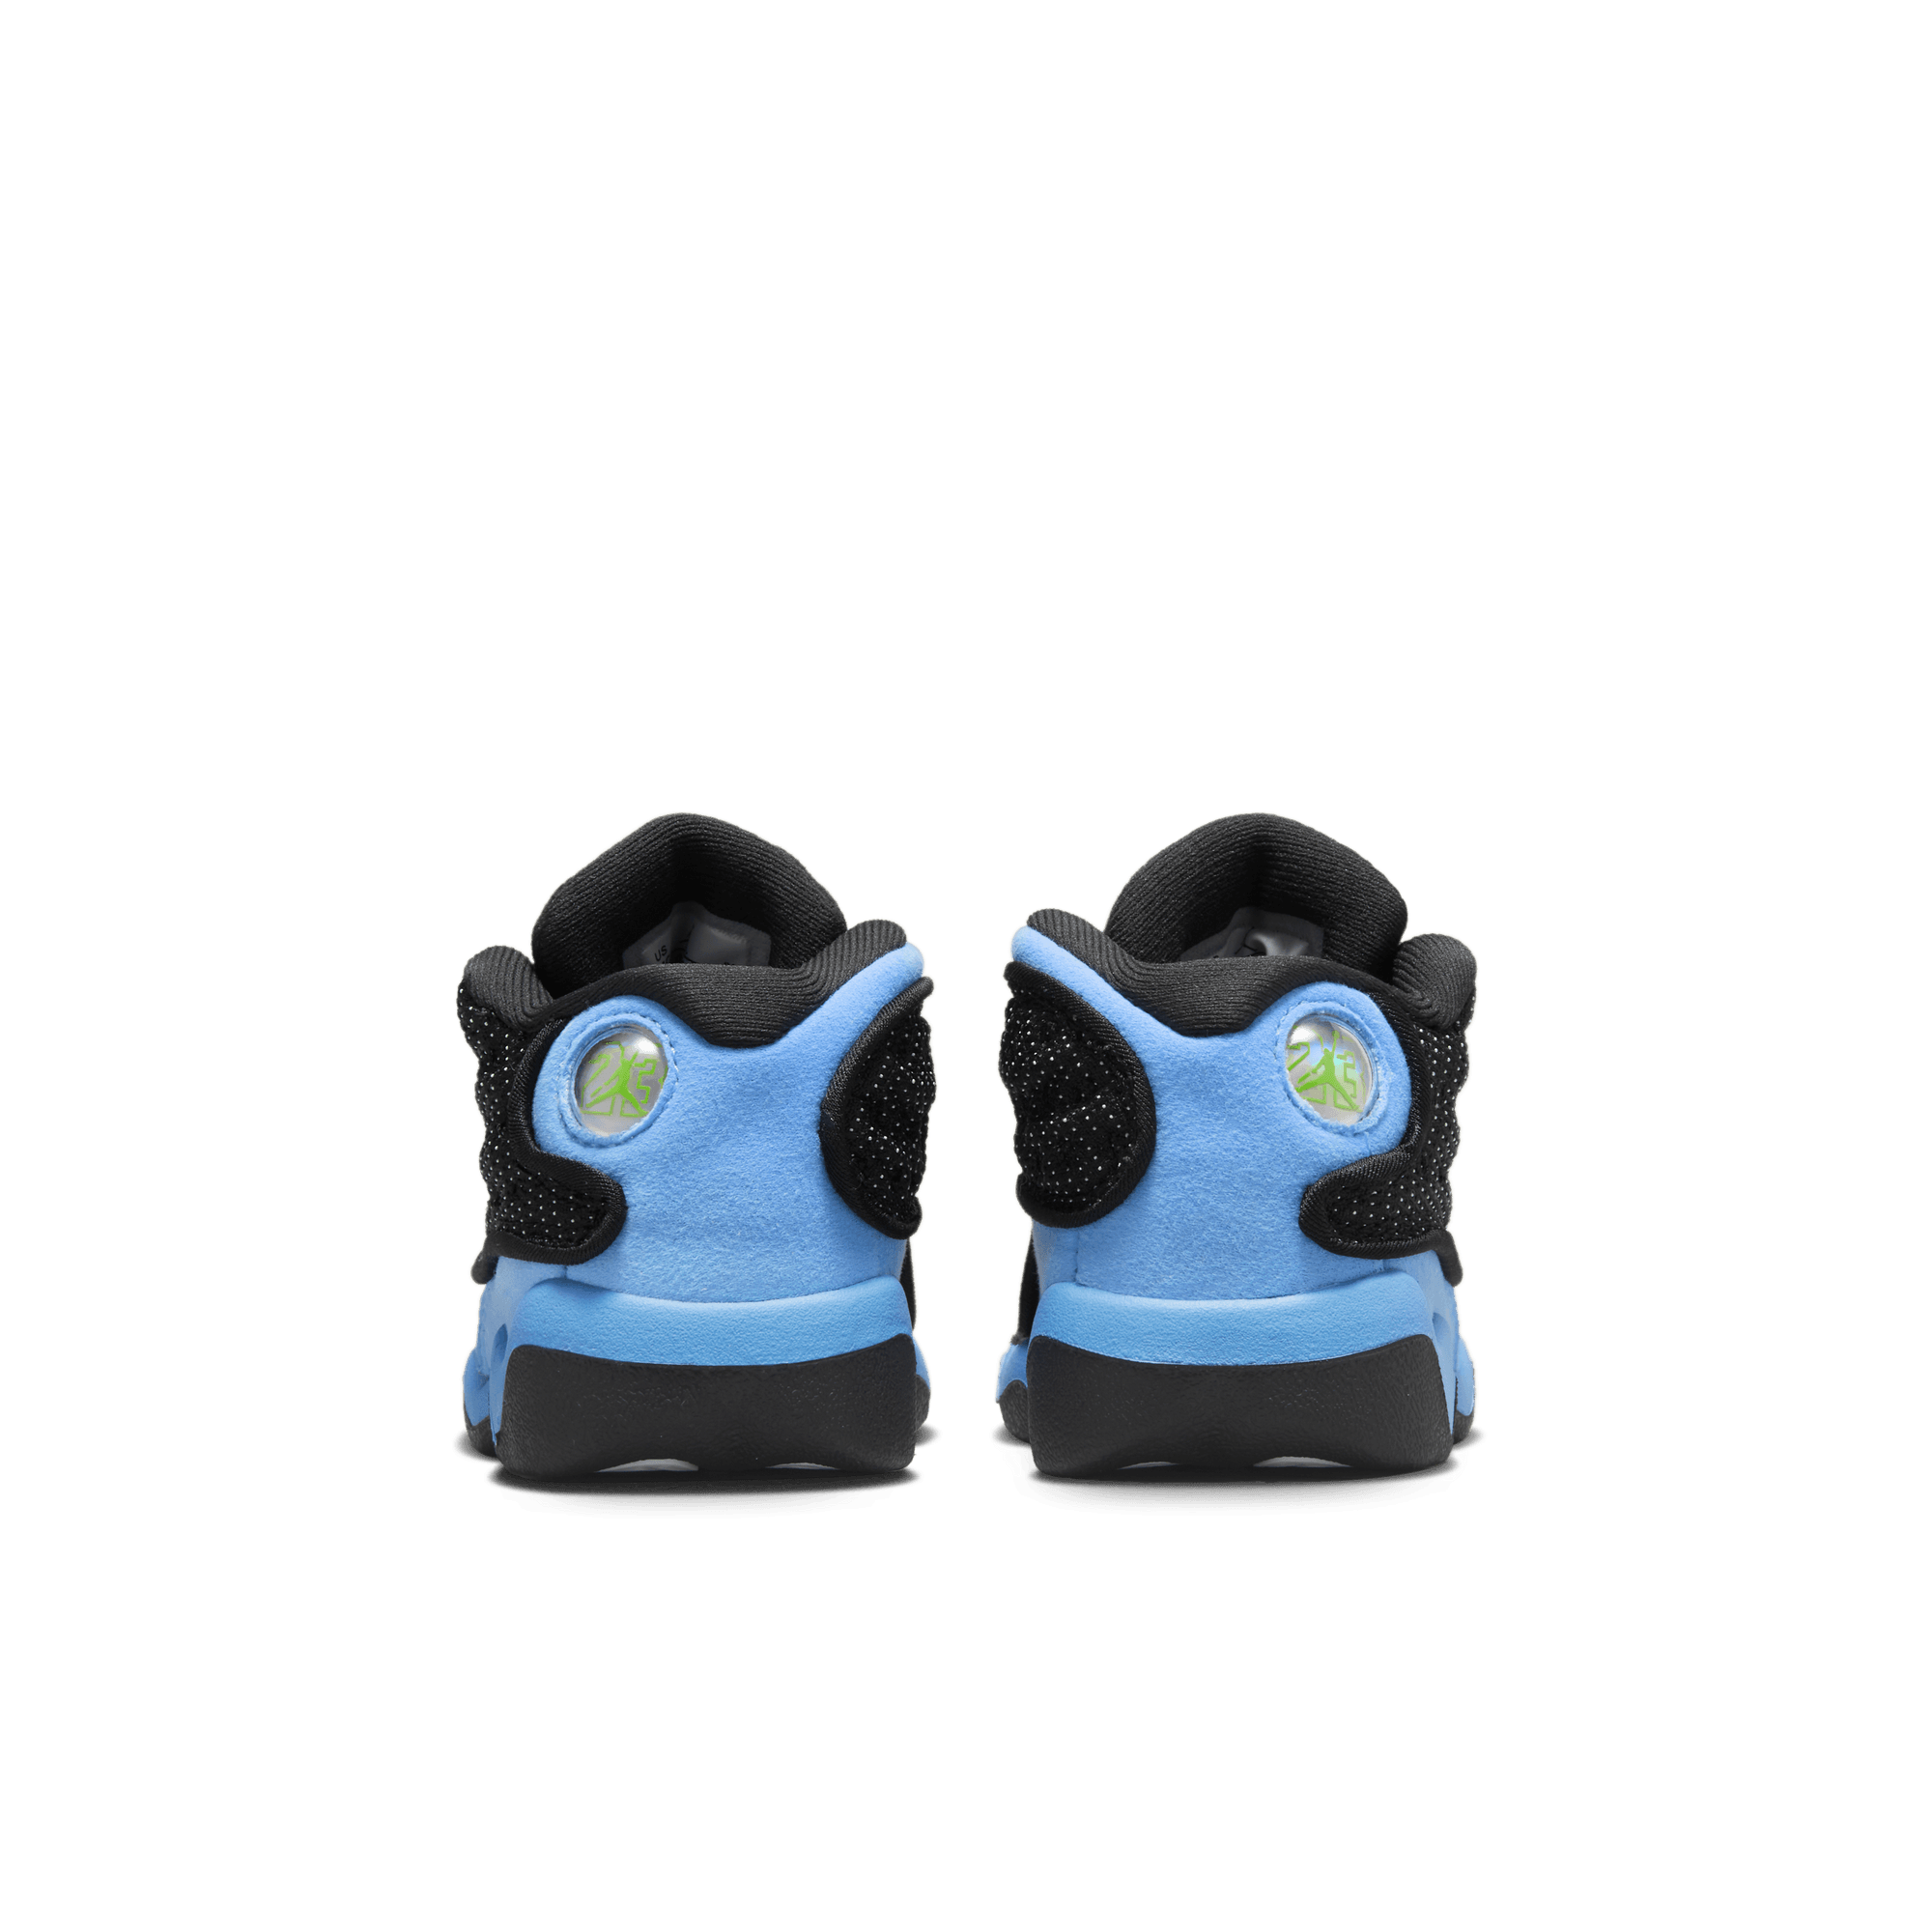 Air Jordan FOOTWEAR Air Jordan 13 Retro Black University Blue - Toddler